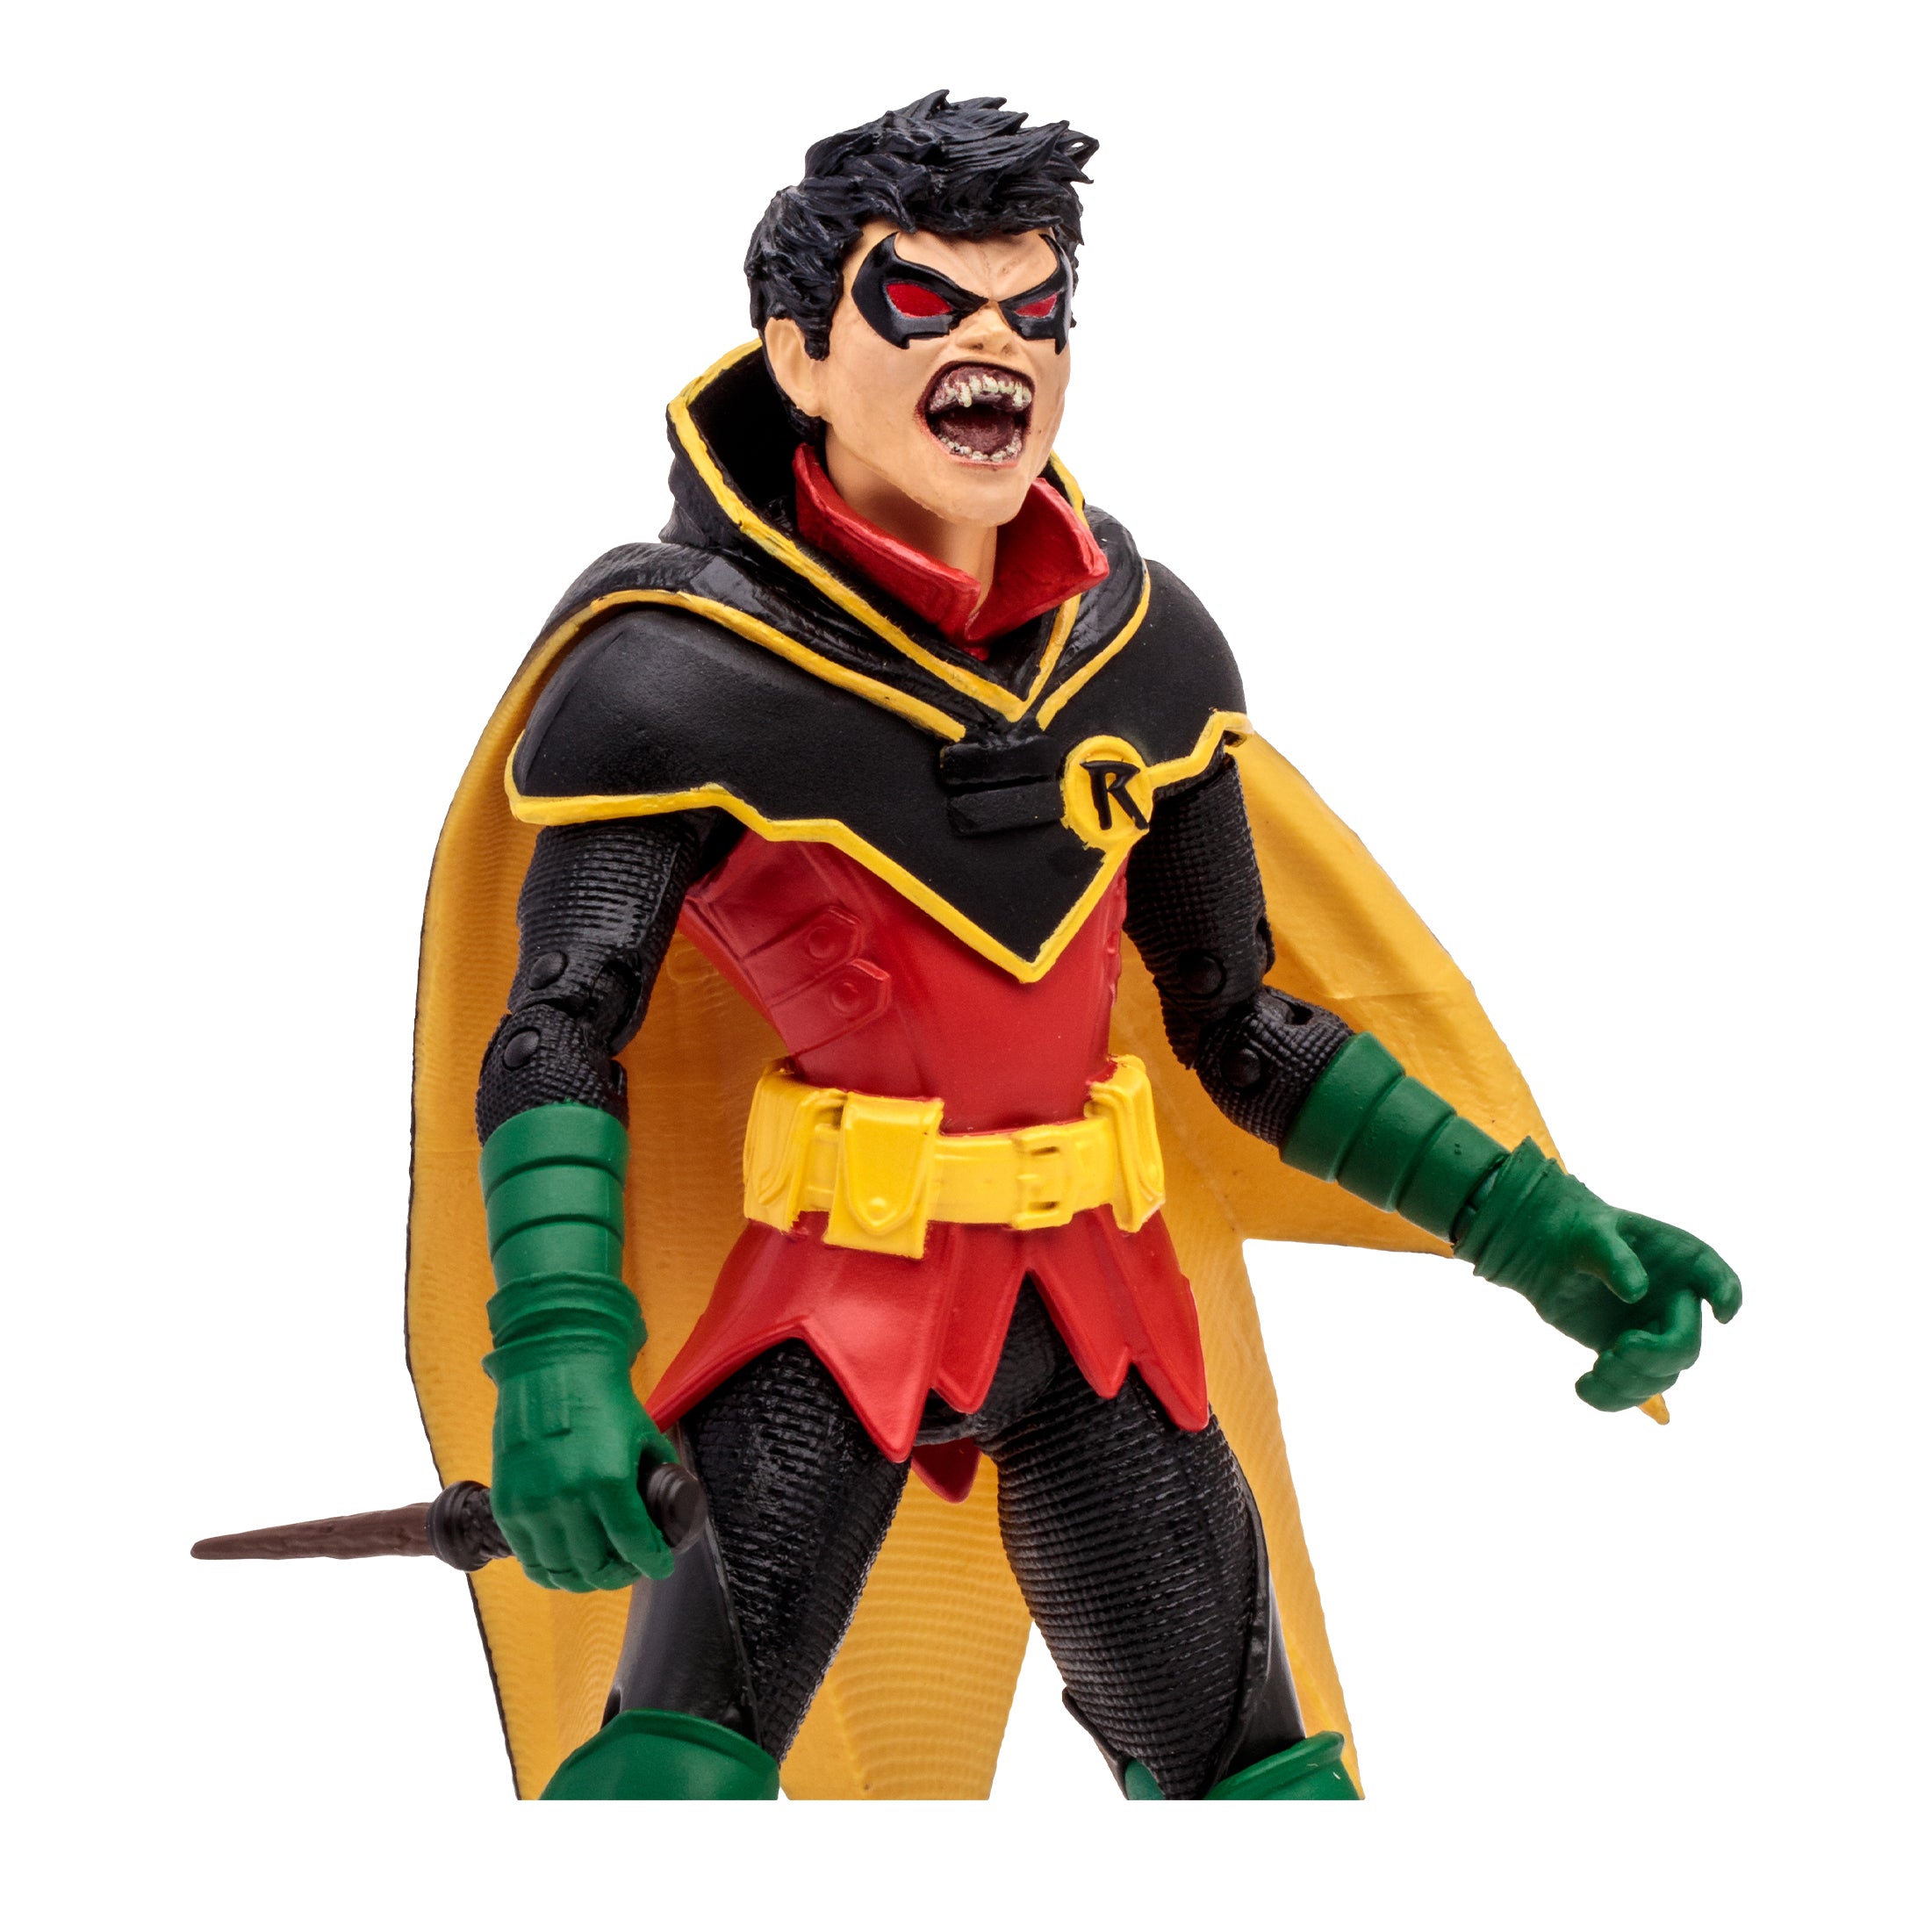 McFarlane Figura de Accion: DC Vs Vampiros - Damian Wayne Robin Gold Label 7 Pulgadas